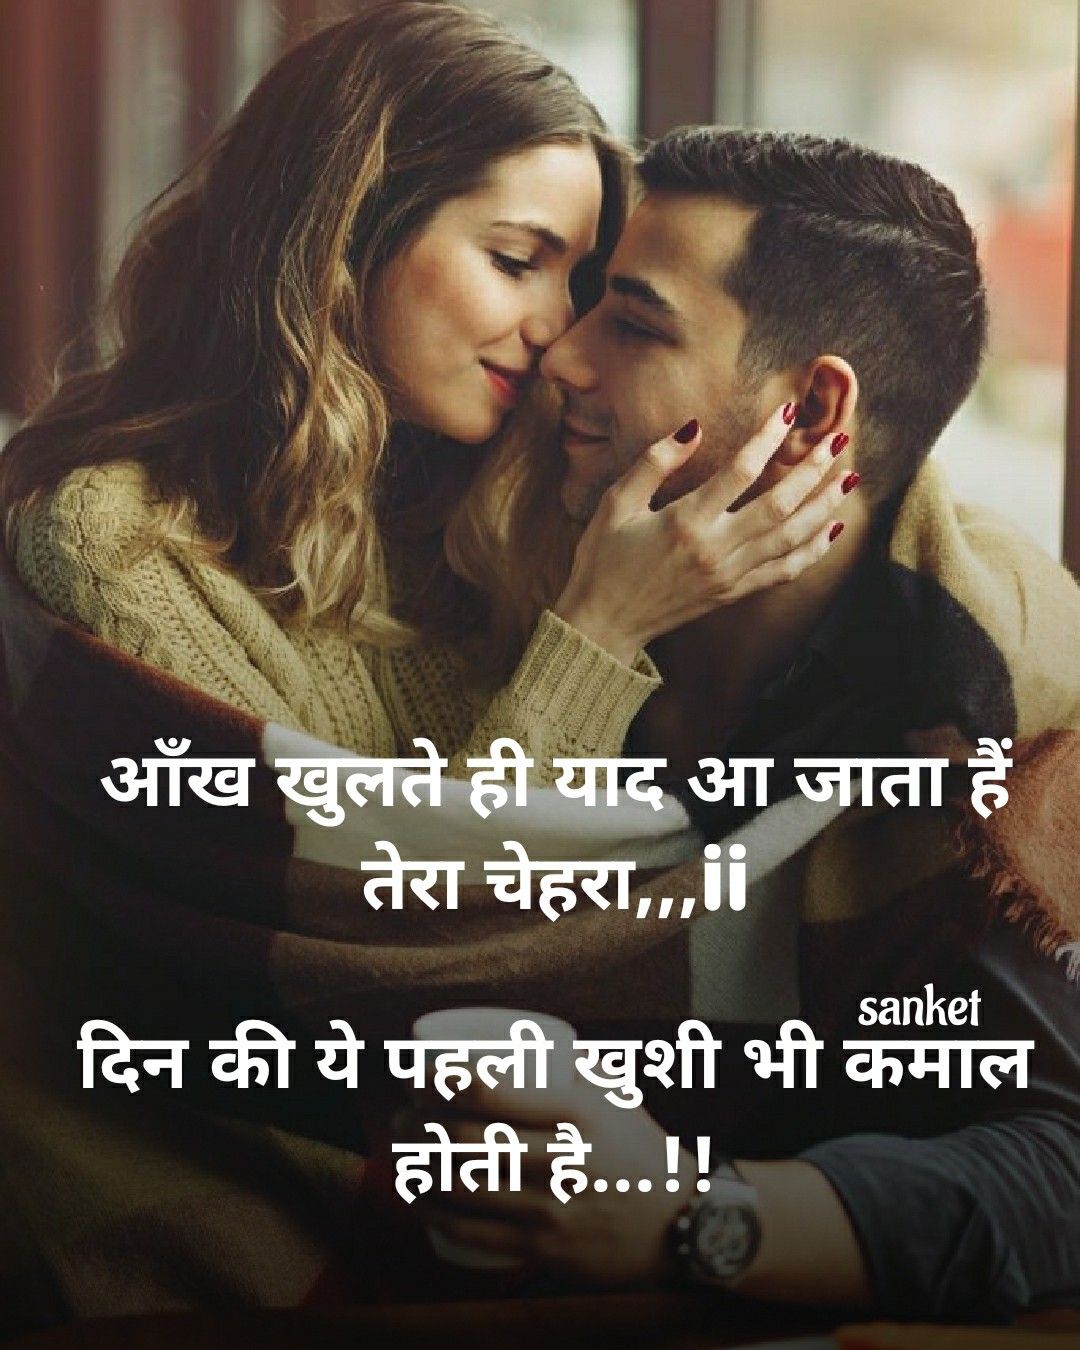 Romantic Shayari in Hindi for girlfriend / boyfriend